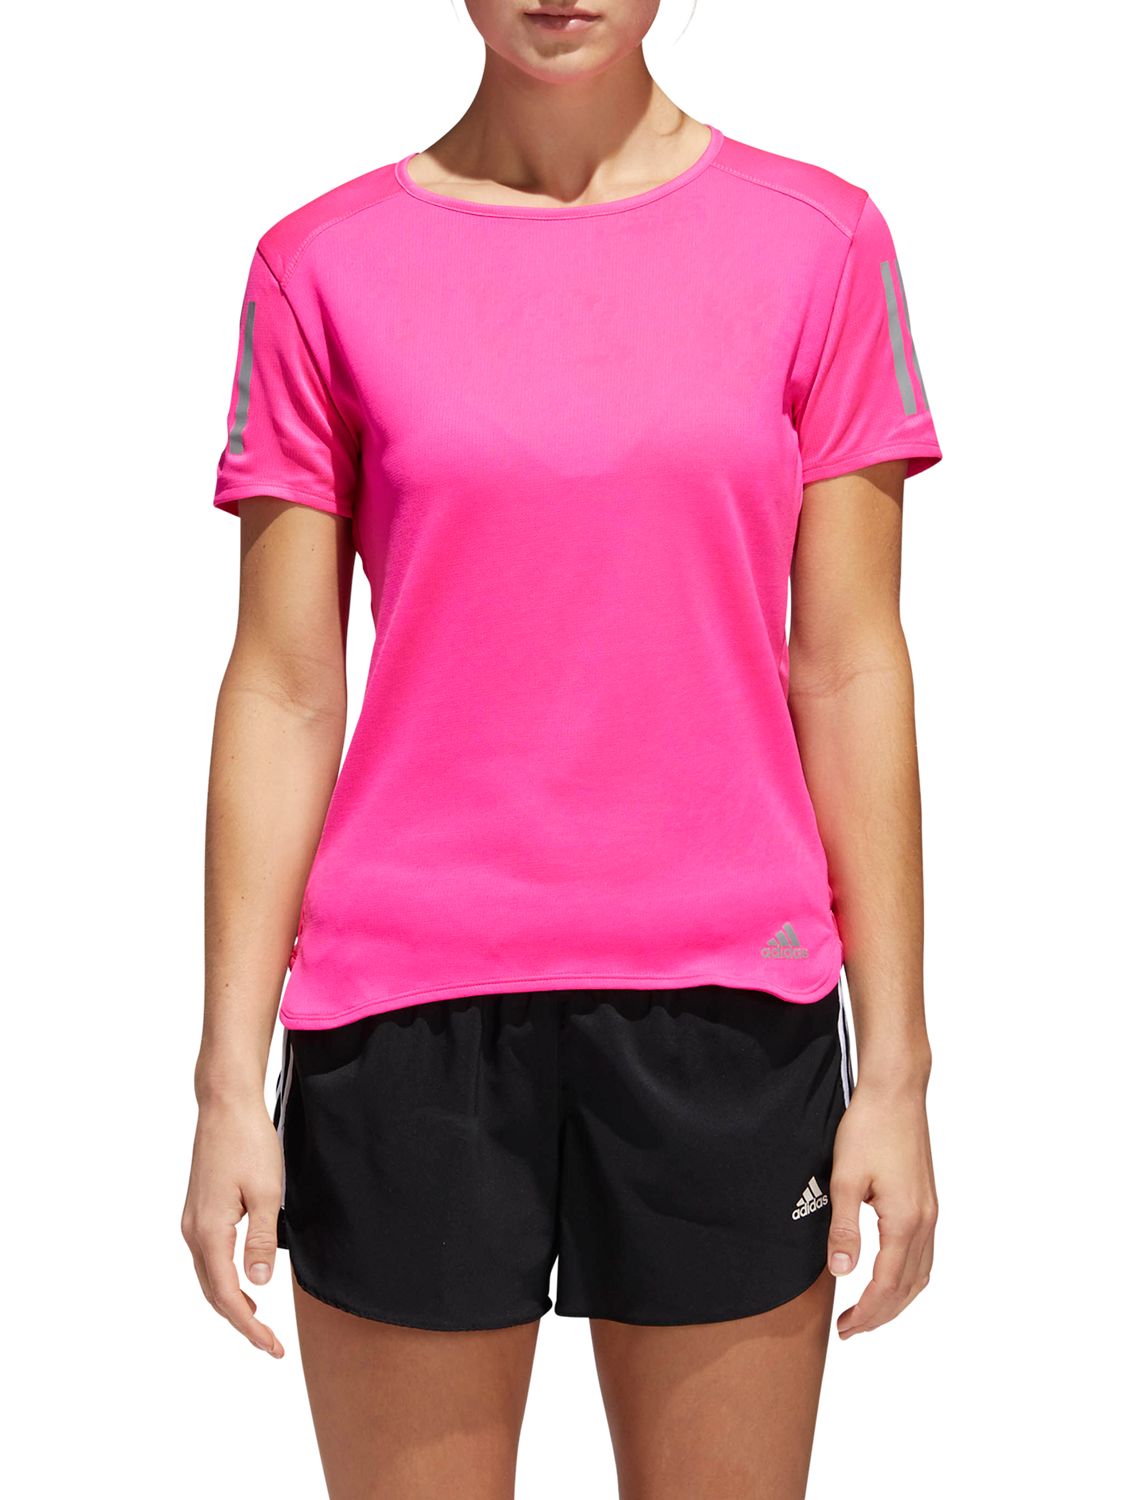 adidas Response Short Sleeve Running T-Shirt, Shock Pink, M